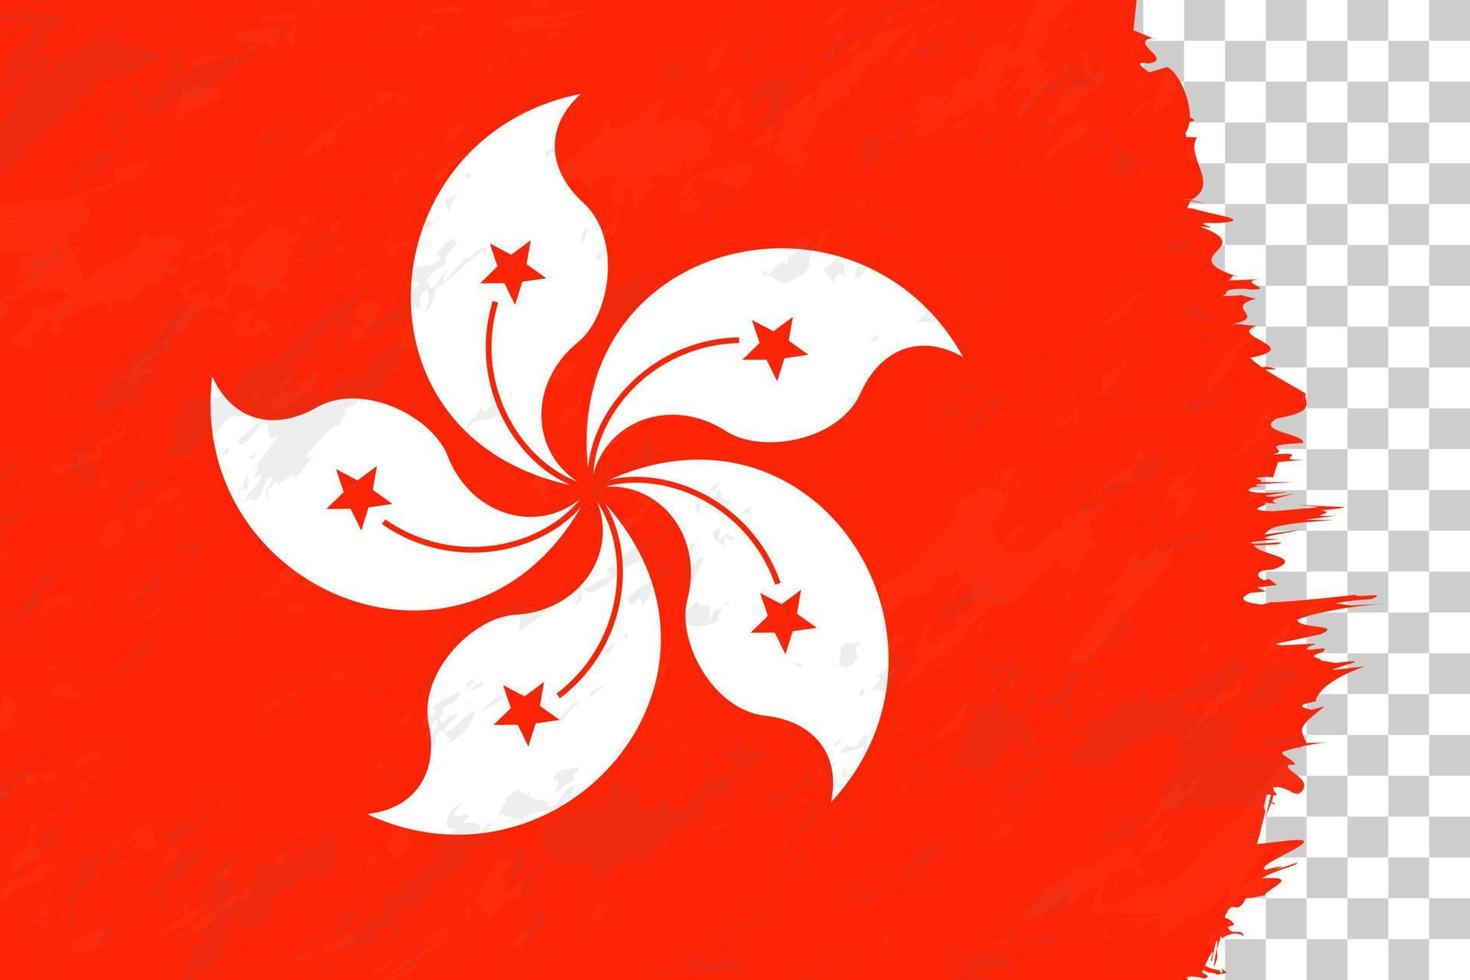 Horizontal Abstract Grunge Brushed Flag of Hong Kong on Transparent Grid. vector